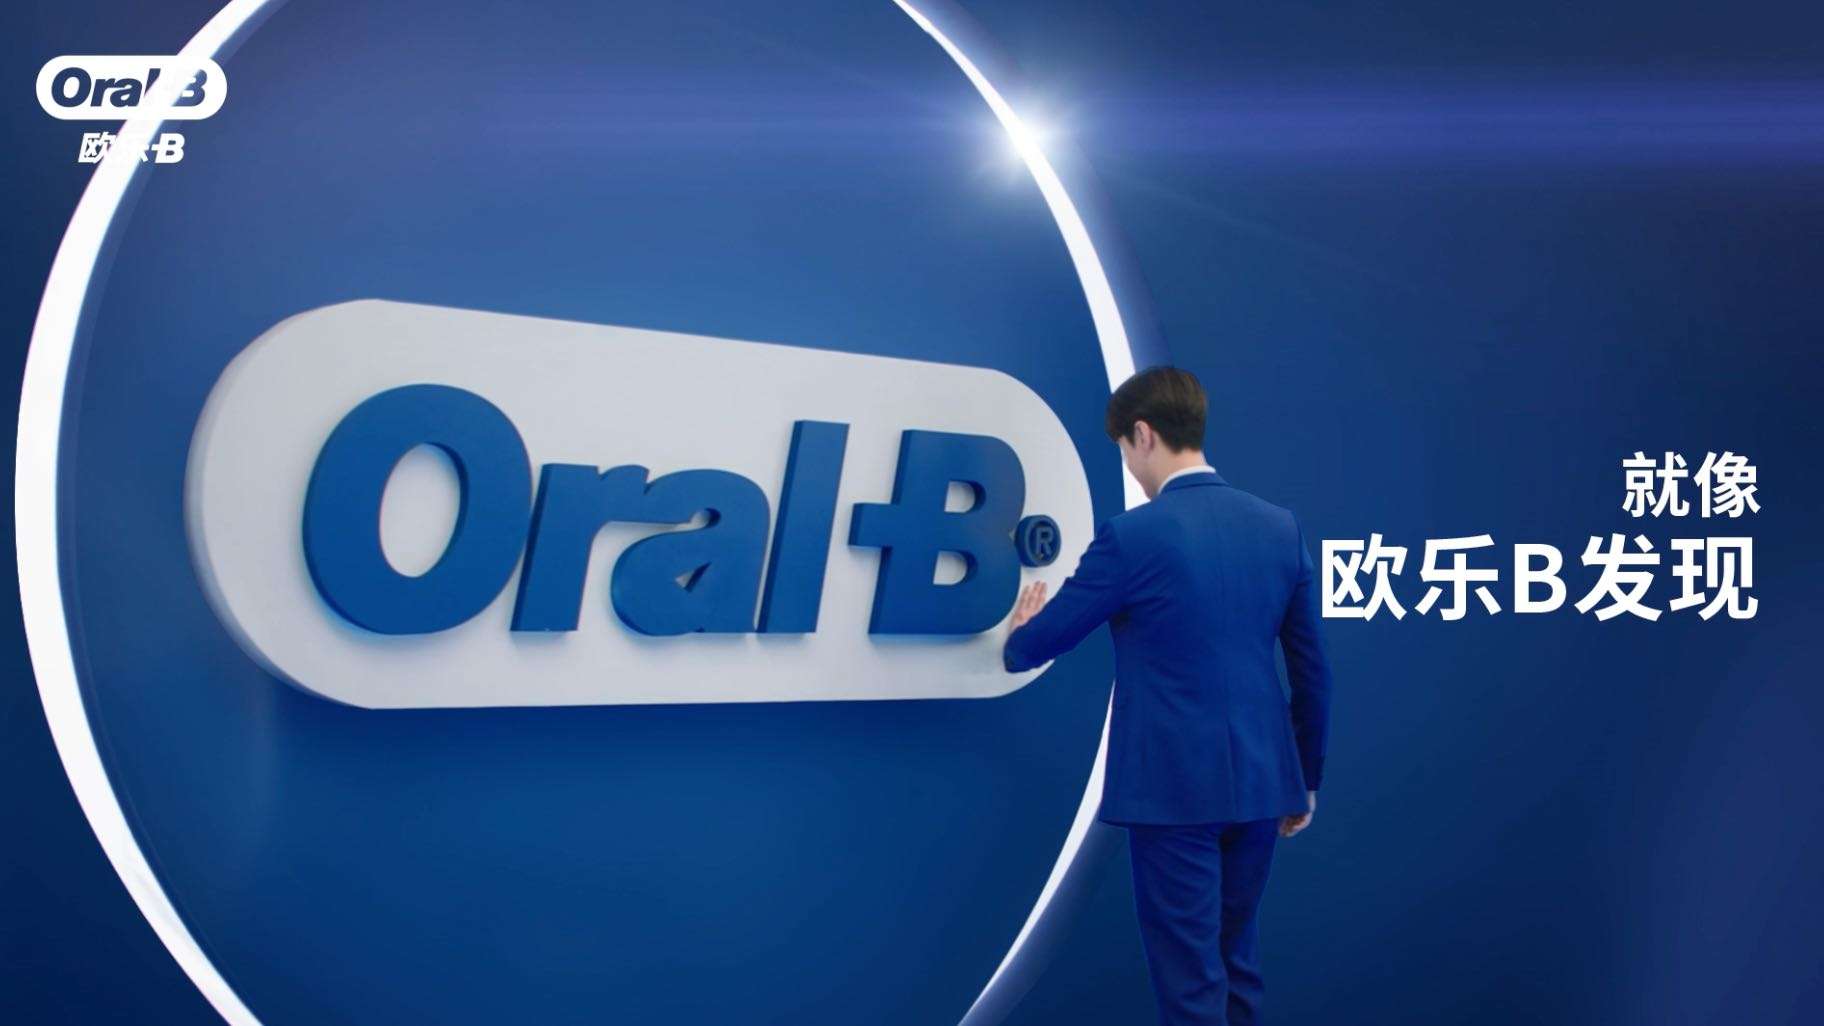 Oral-B Brand video 欧乐B电动牙刷